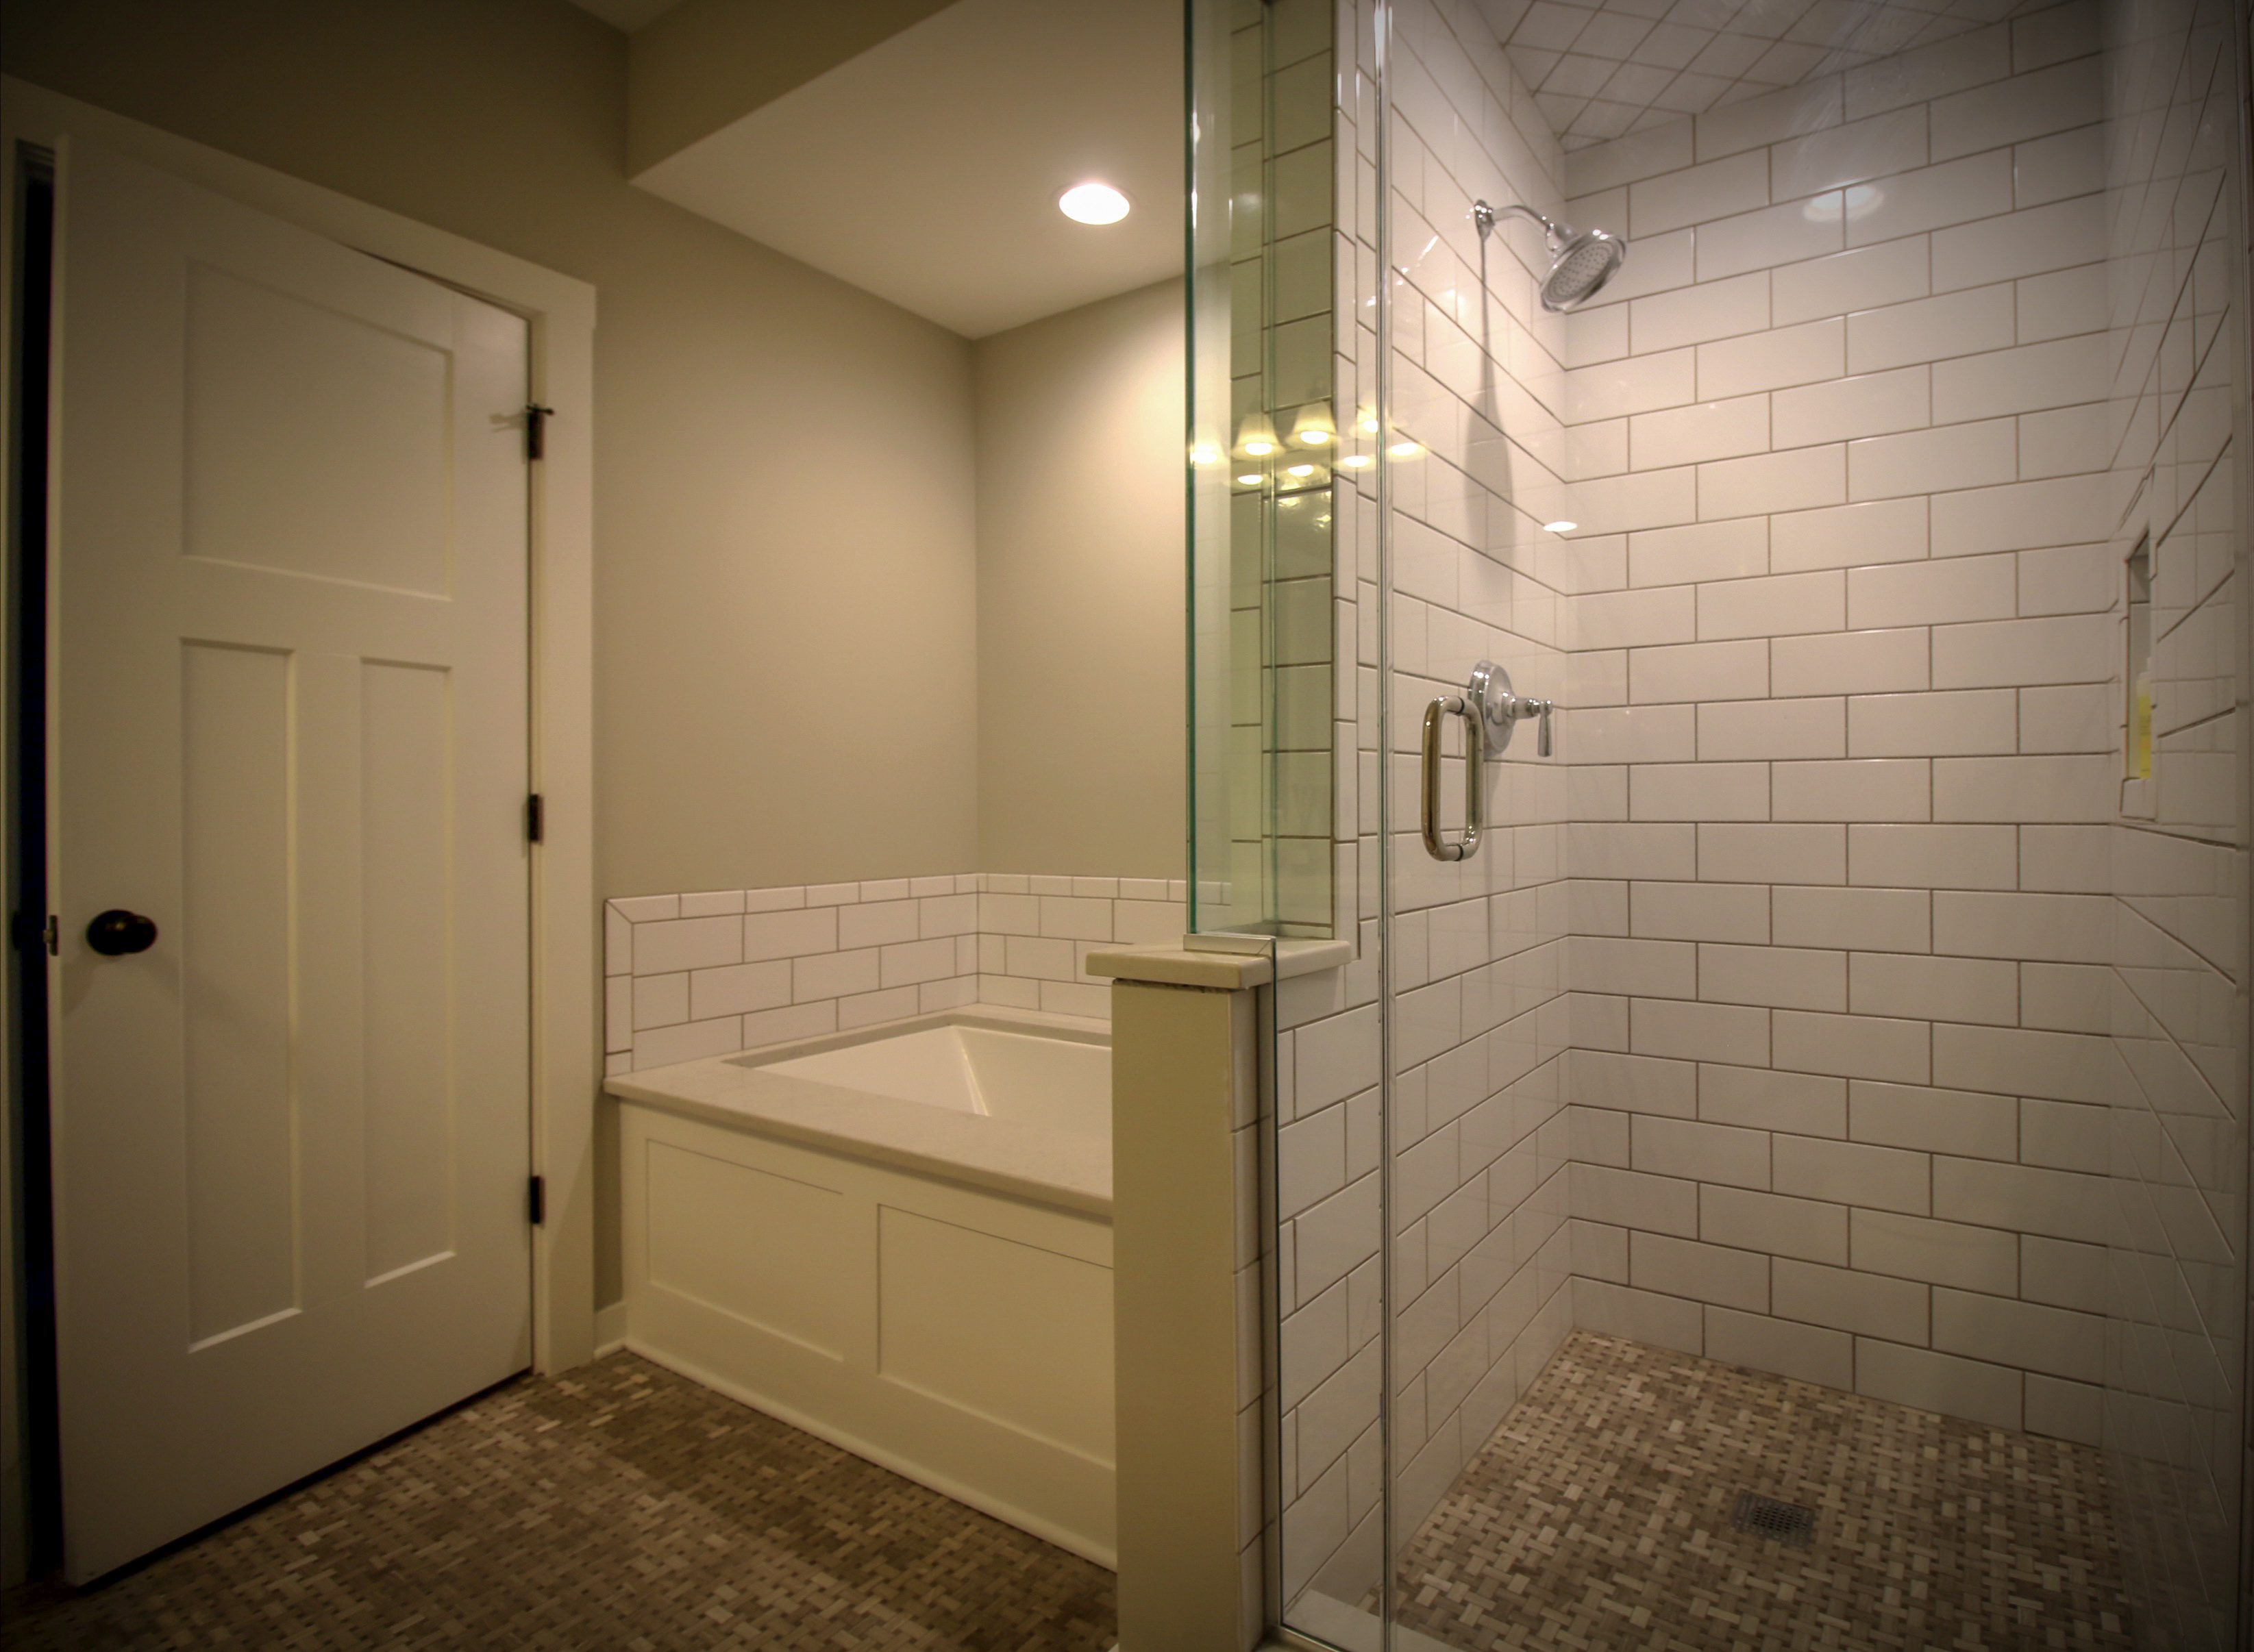 Bathroom Upgrade With Subway Tile Shower